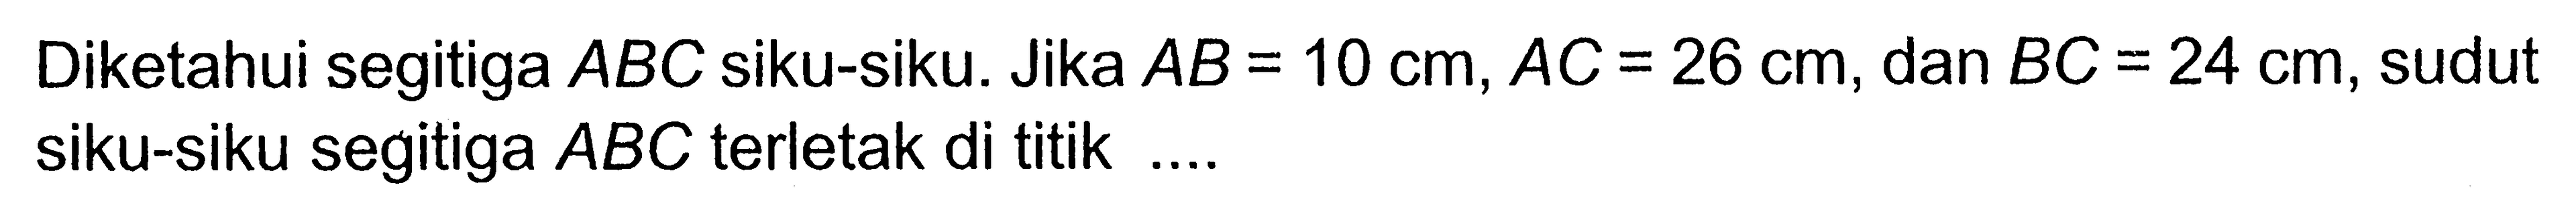 Diketahui segitiga ABC siku-siku. Jika AB=10 cm, AC=26 cm, dan BC=24 cm, sudut siku-siku segitiga ABC terletak di titik....